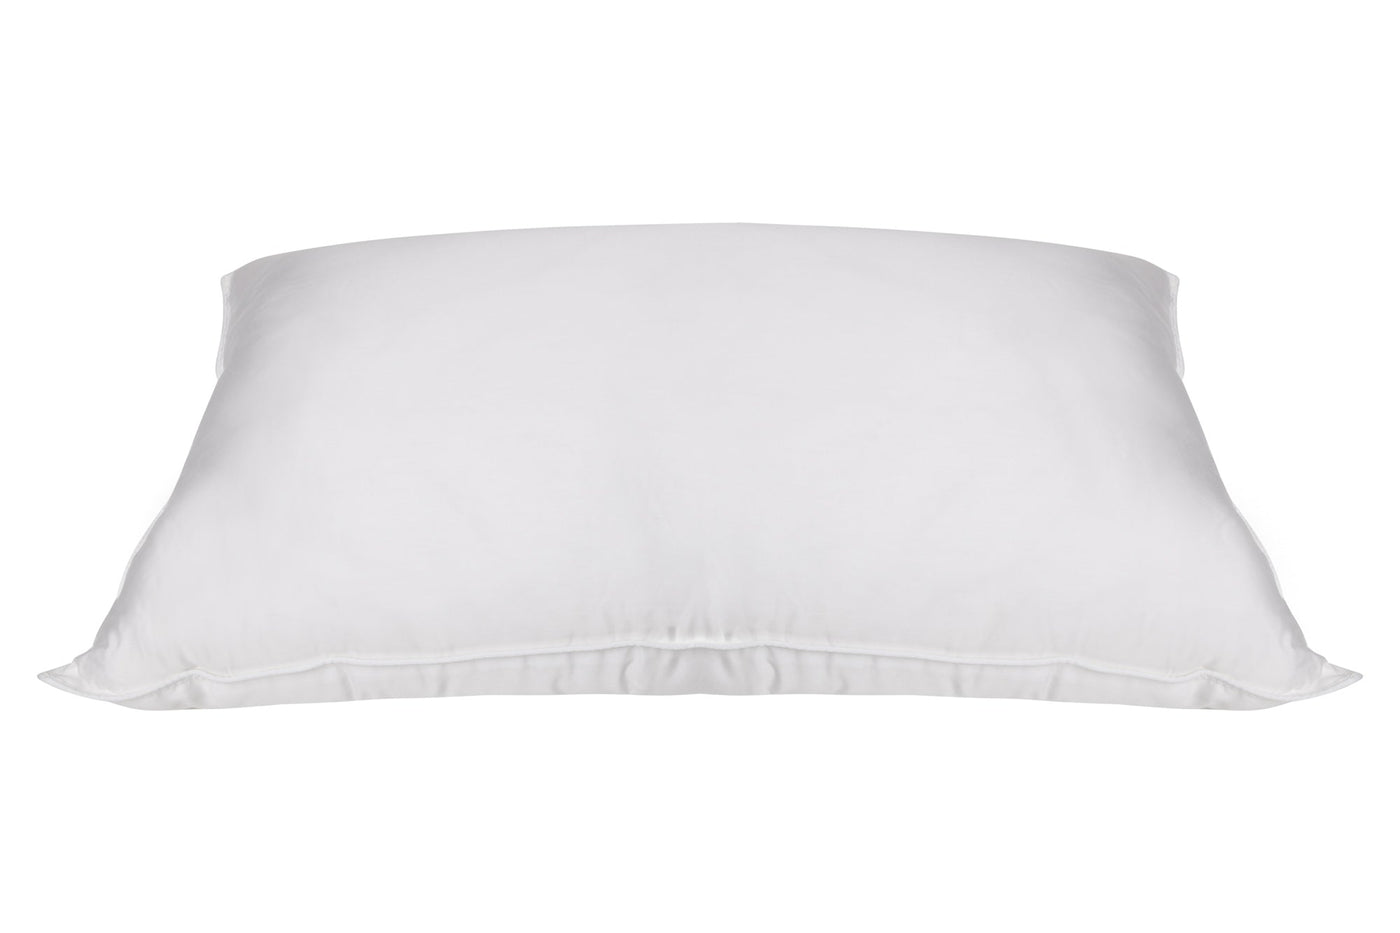 Bed Sheet Bundle + Duvet & Pillows (Organic Eucalyptus Silk)